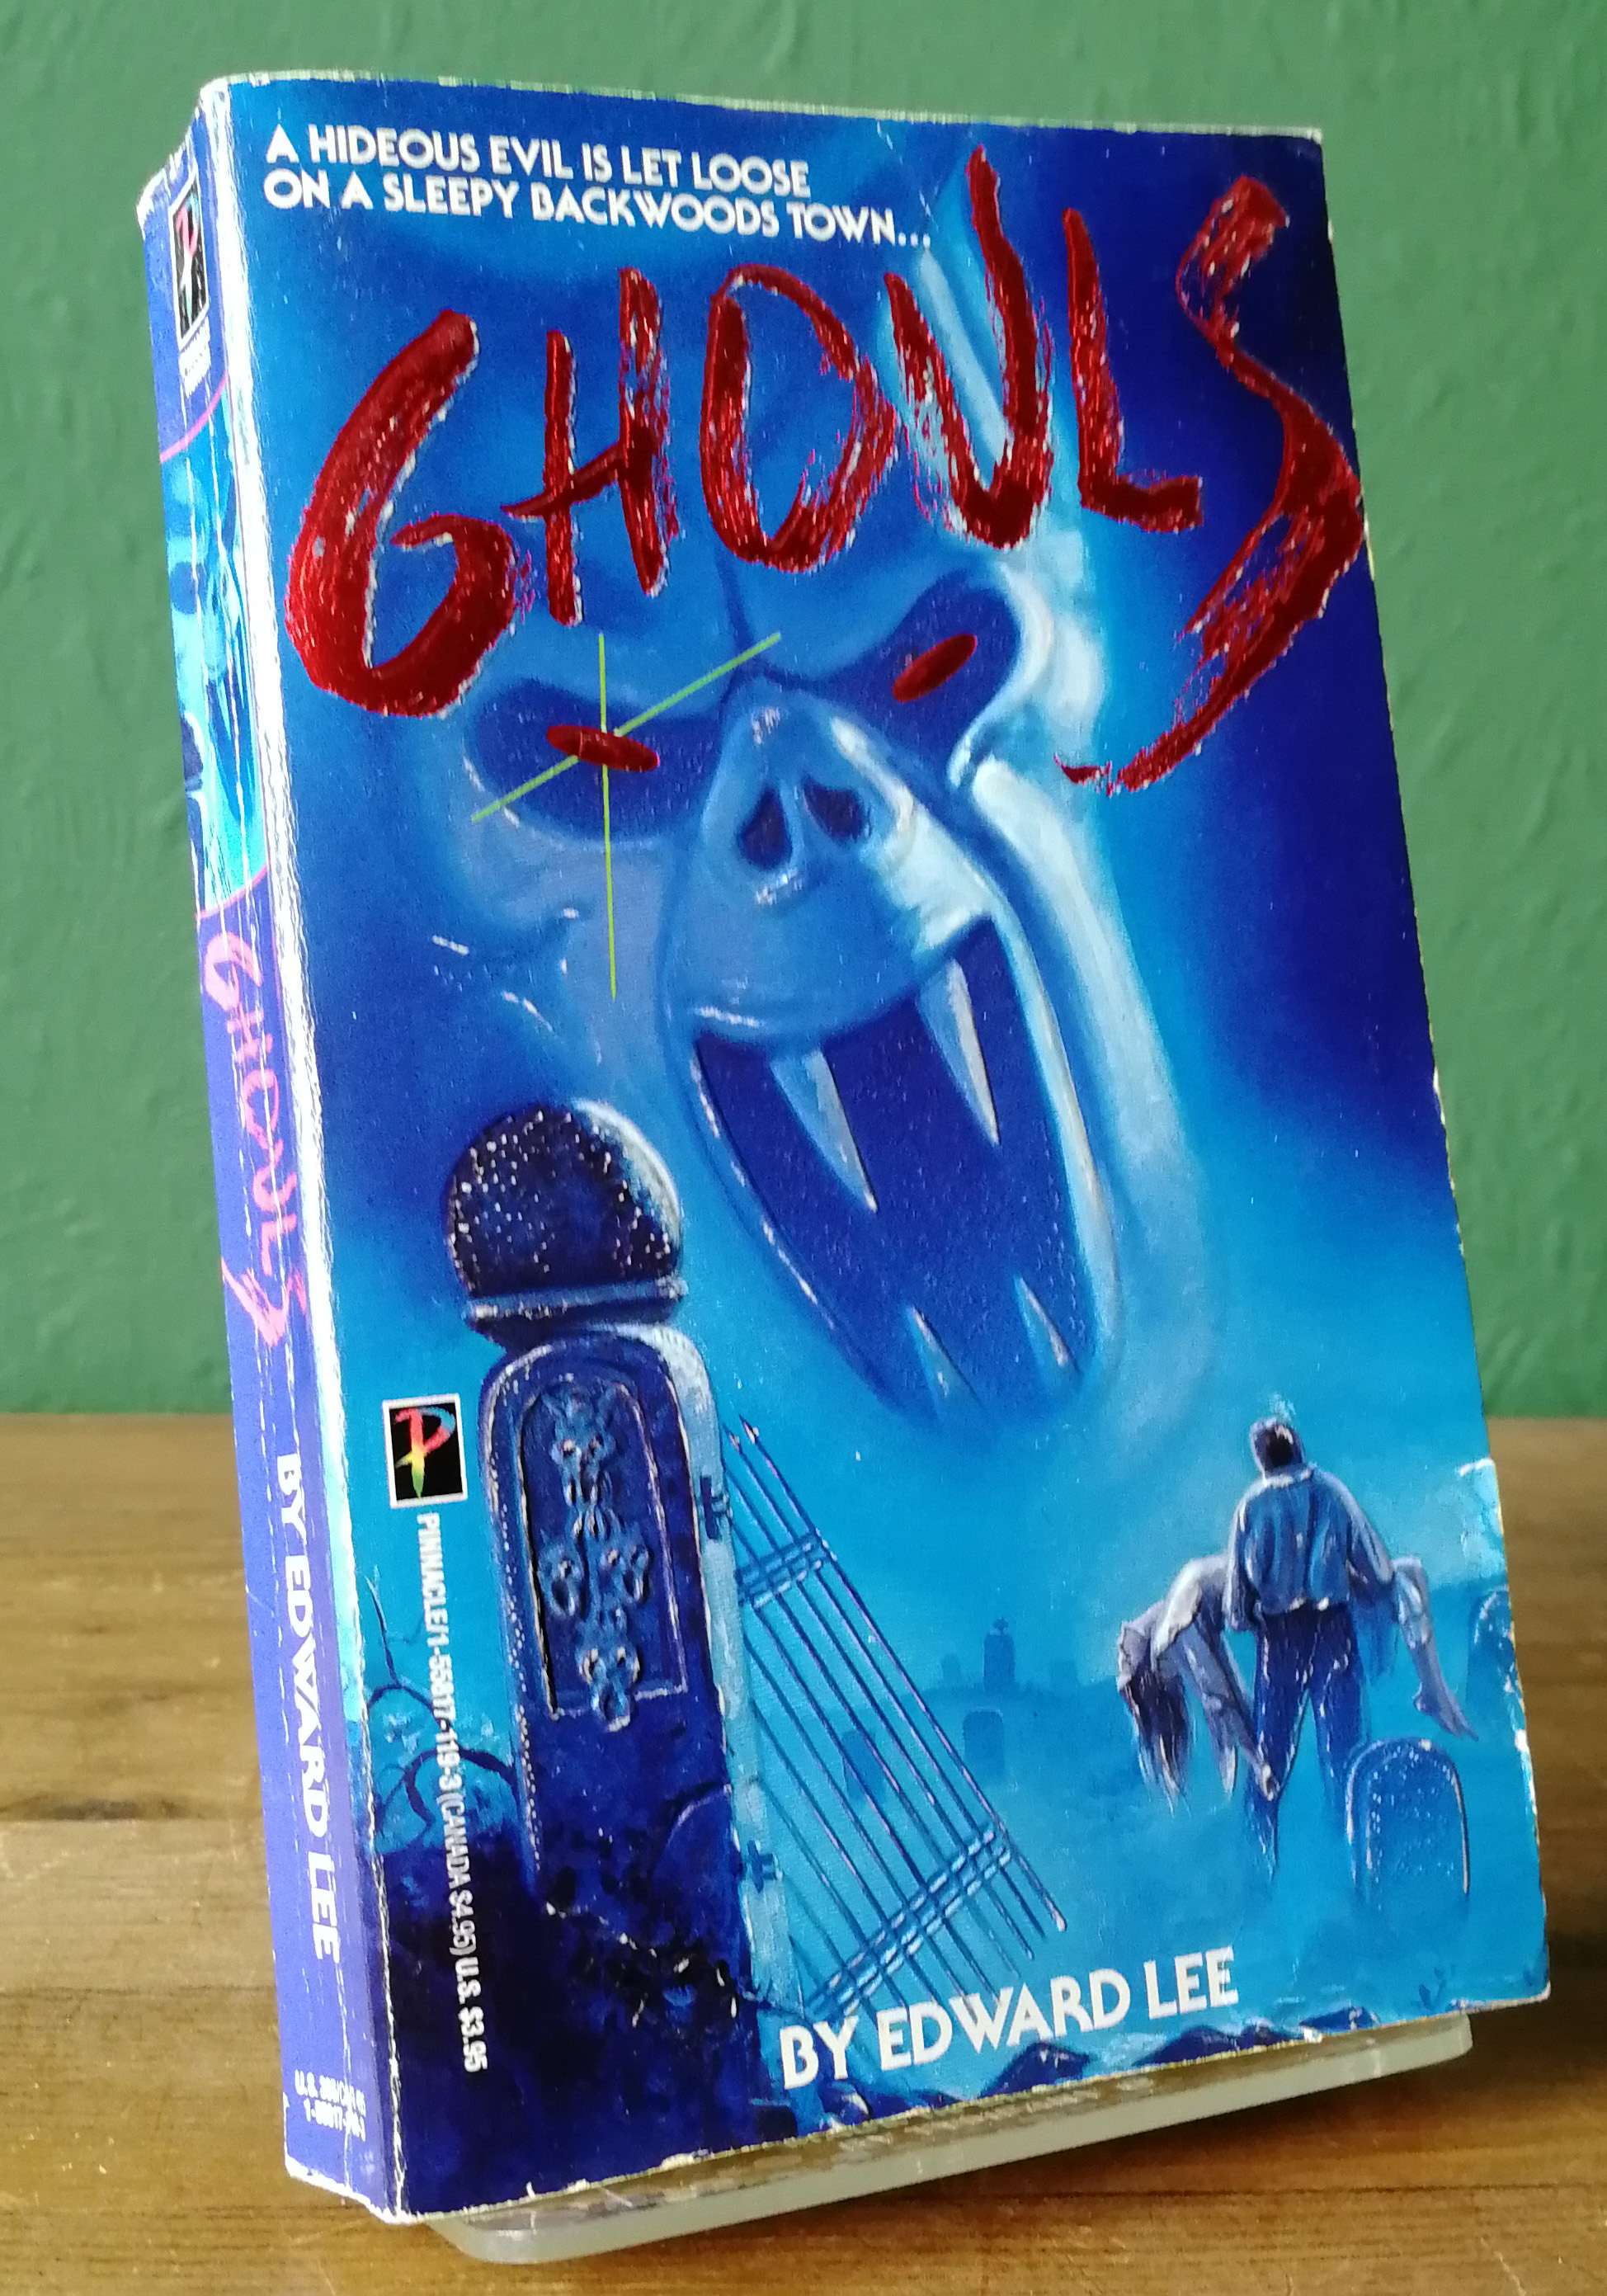 Ghouls Signed US Paperback